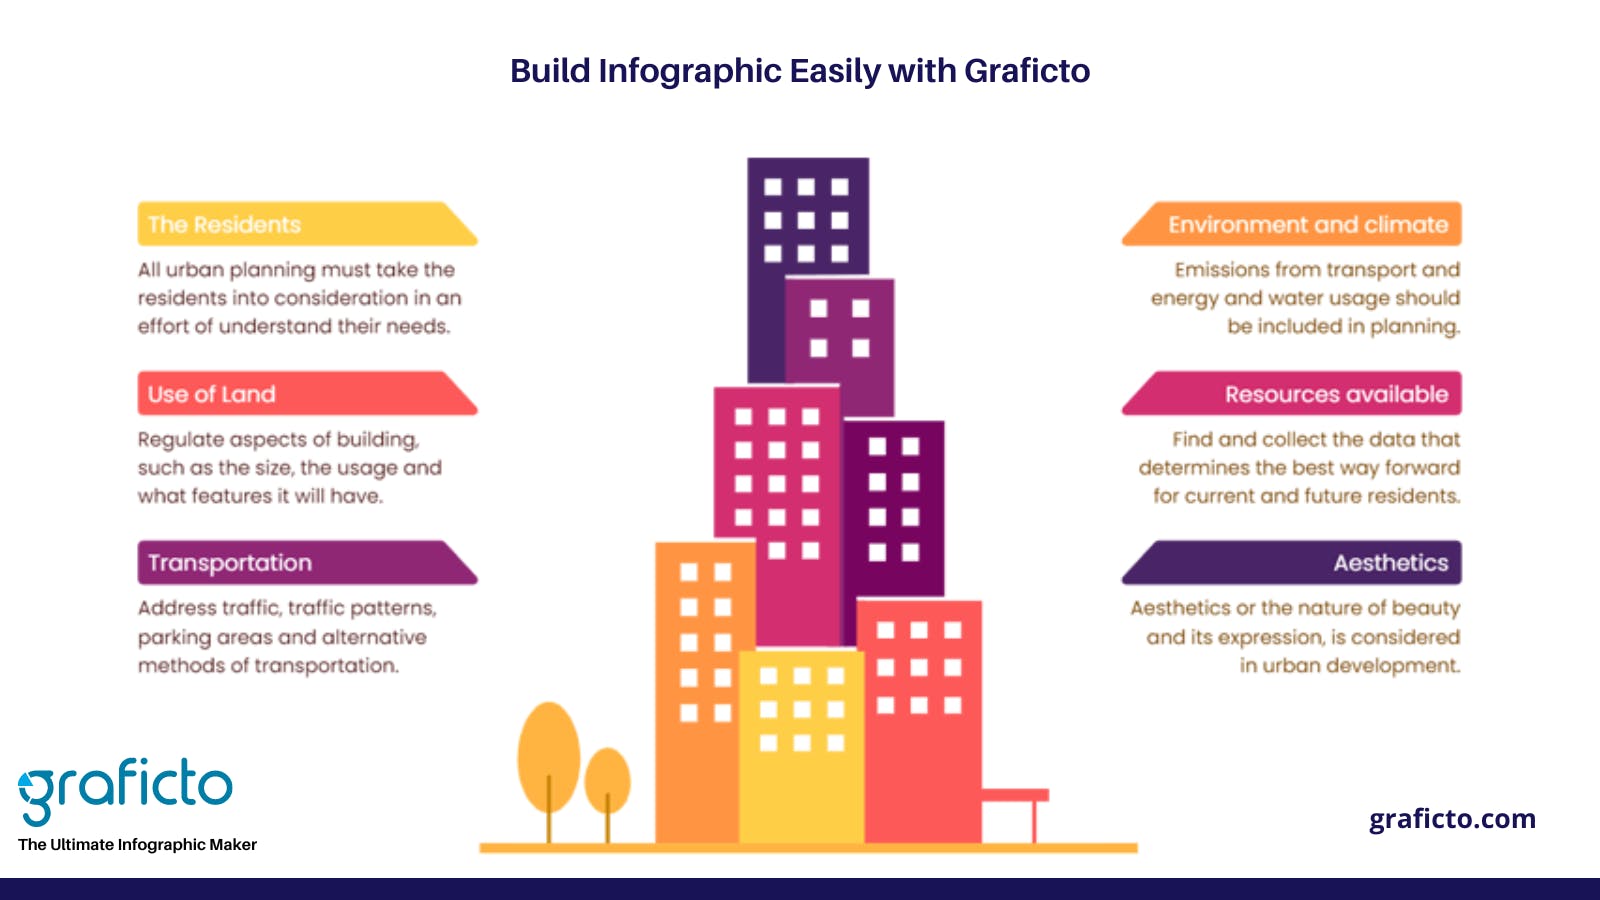 Graficto-infographic-design-sustainability-building